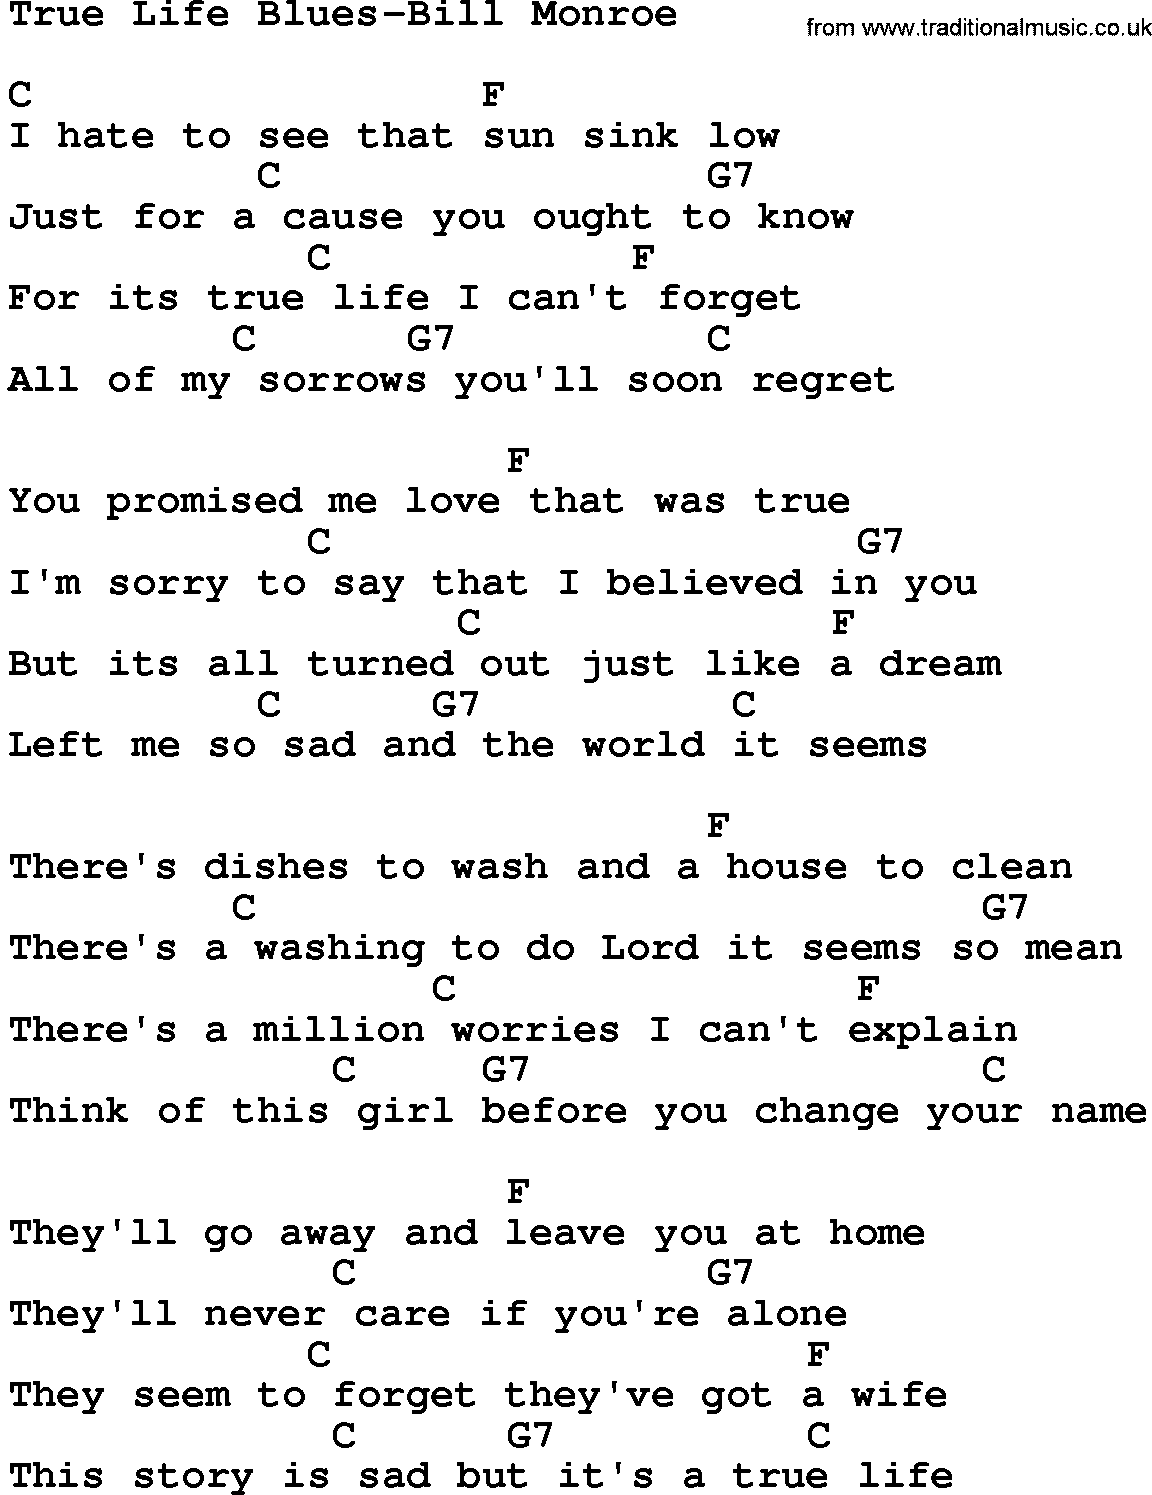 Country music song: True Life Blues-Bill Monroe lyrics and chords